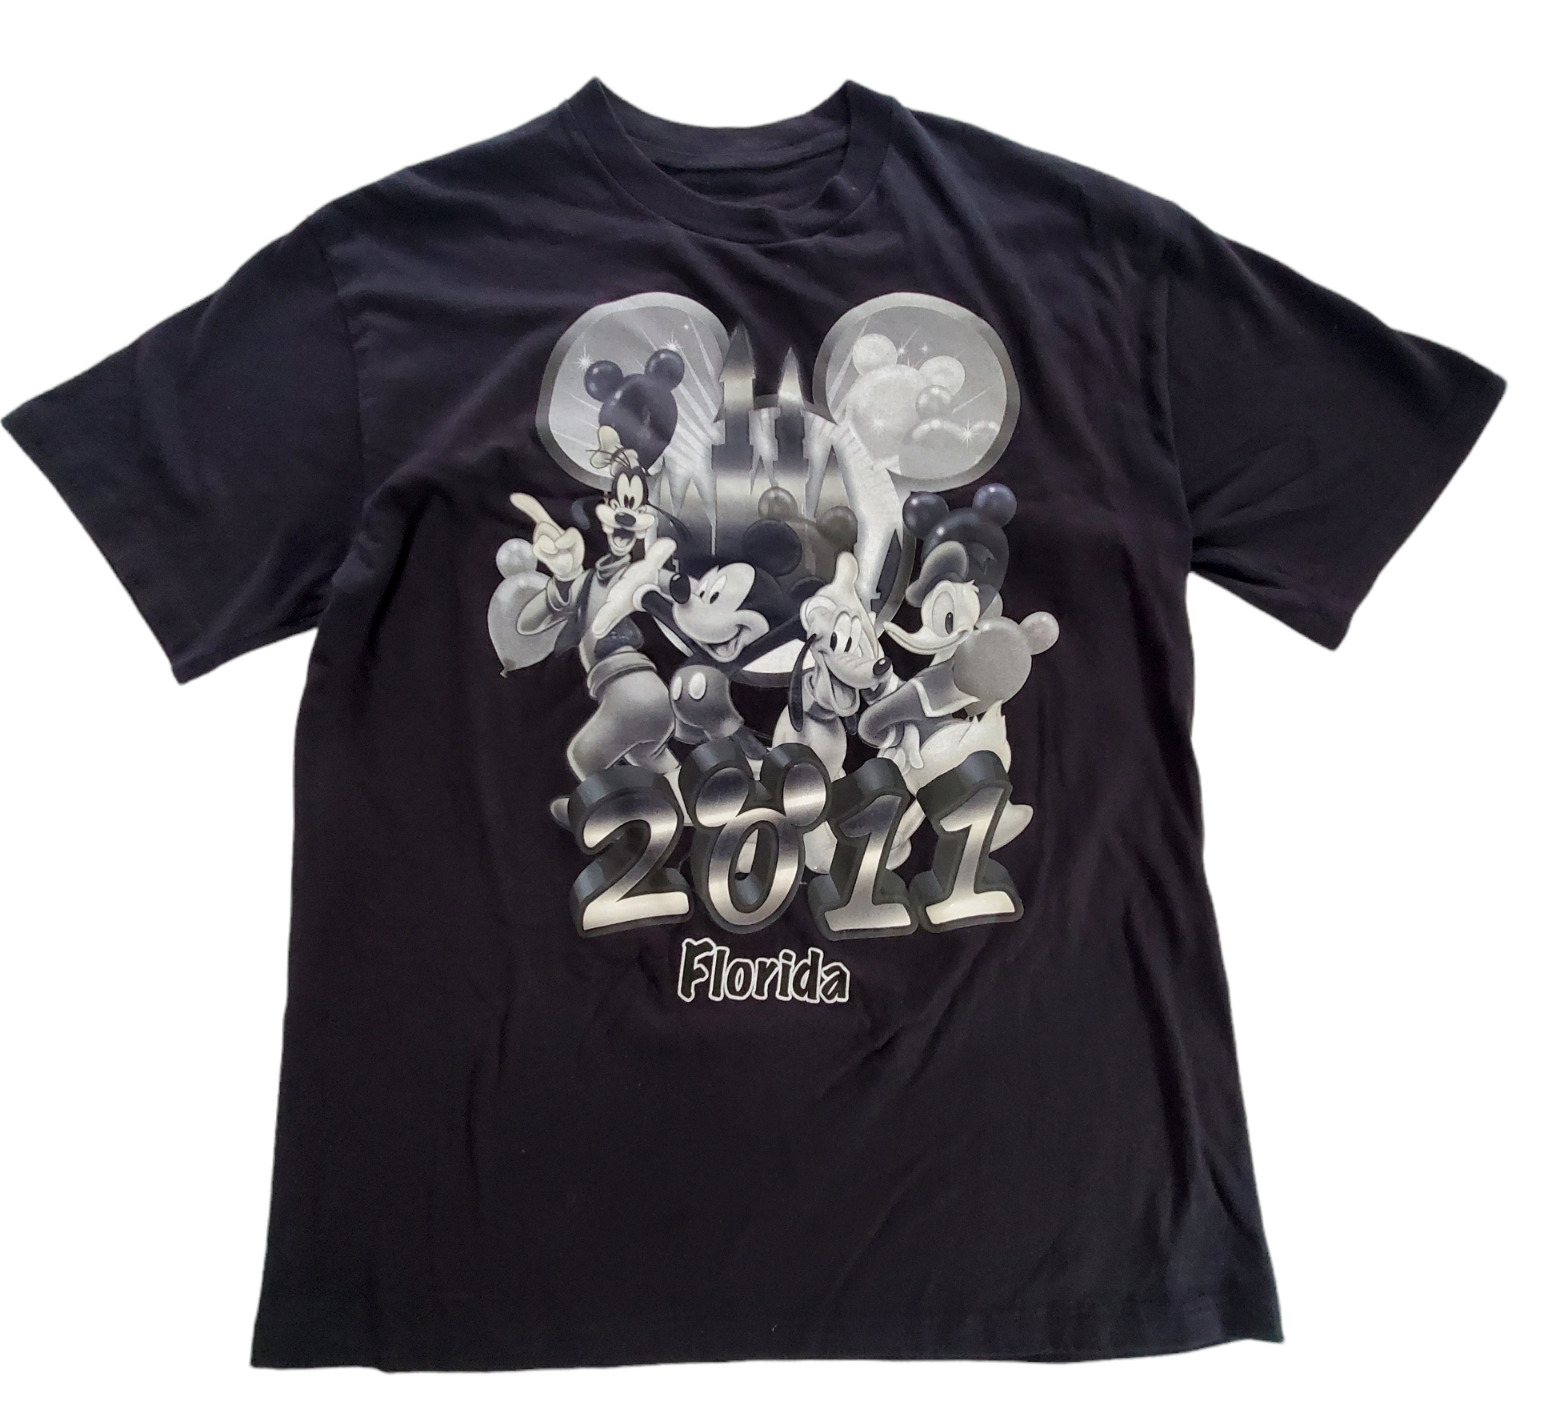 Disney Walt Disney World Florida 2011 Black T Shirt Raised Graphic Adult XL